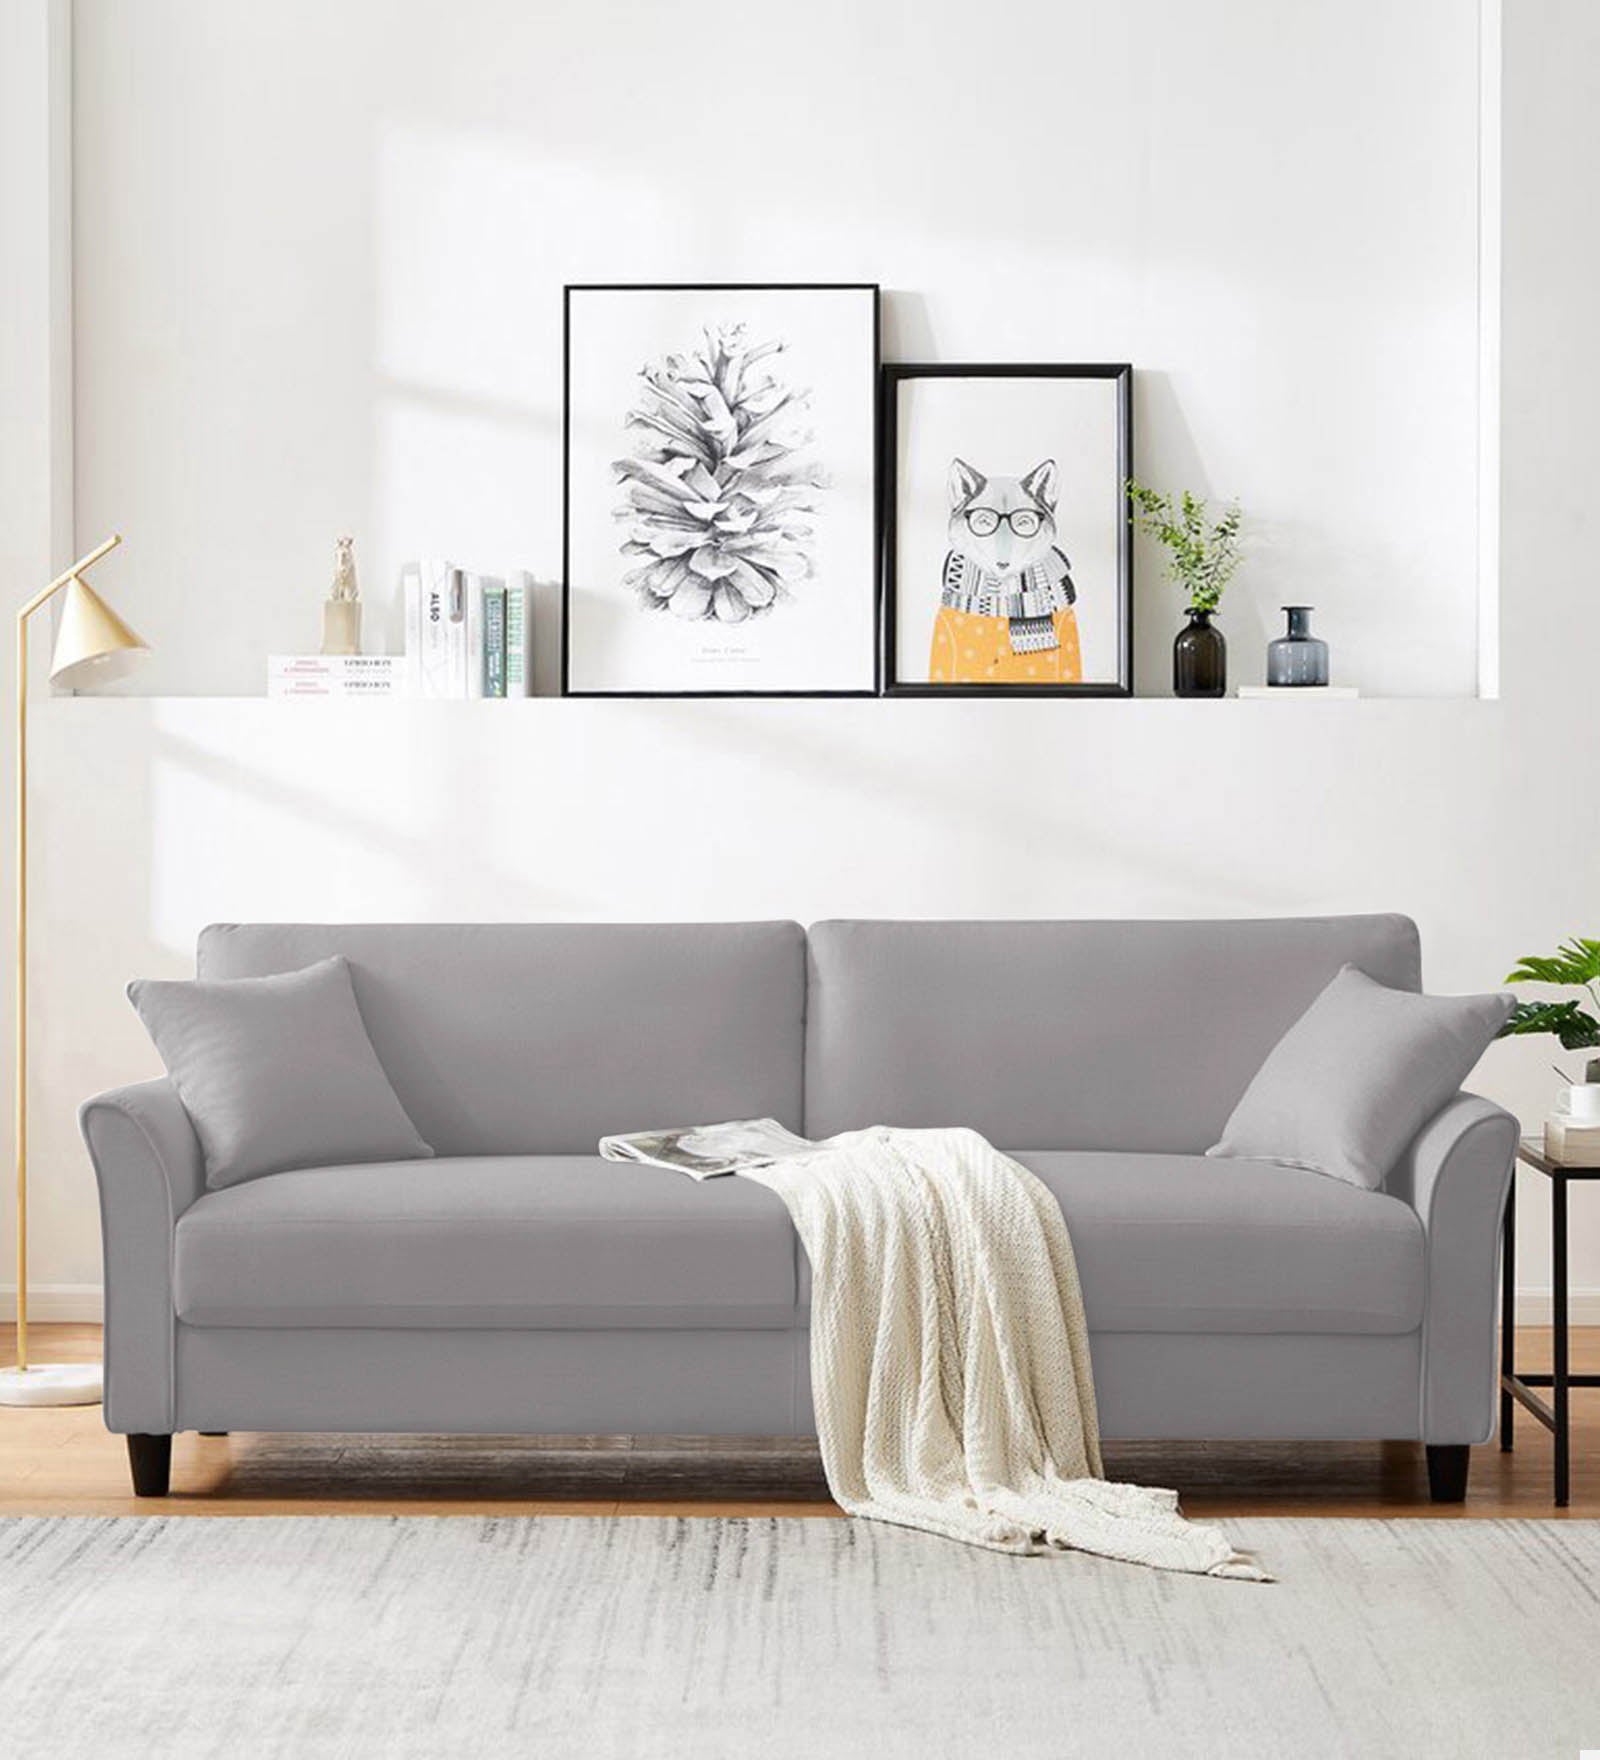 Daroo Velvet 3 Seater Sofa in concrete grey Colour